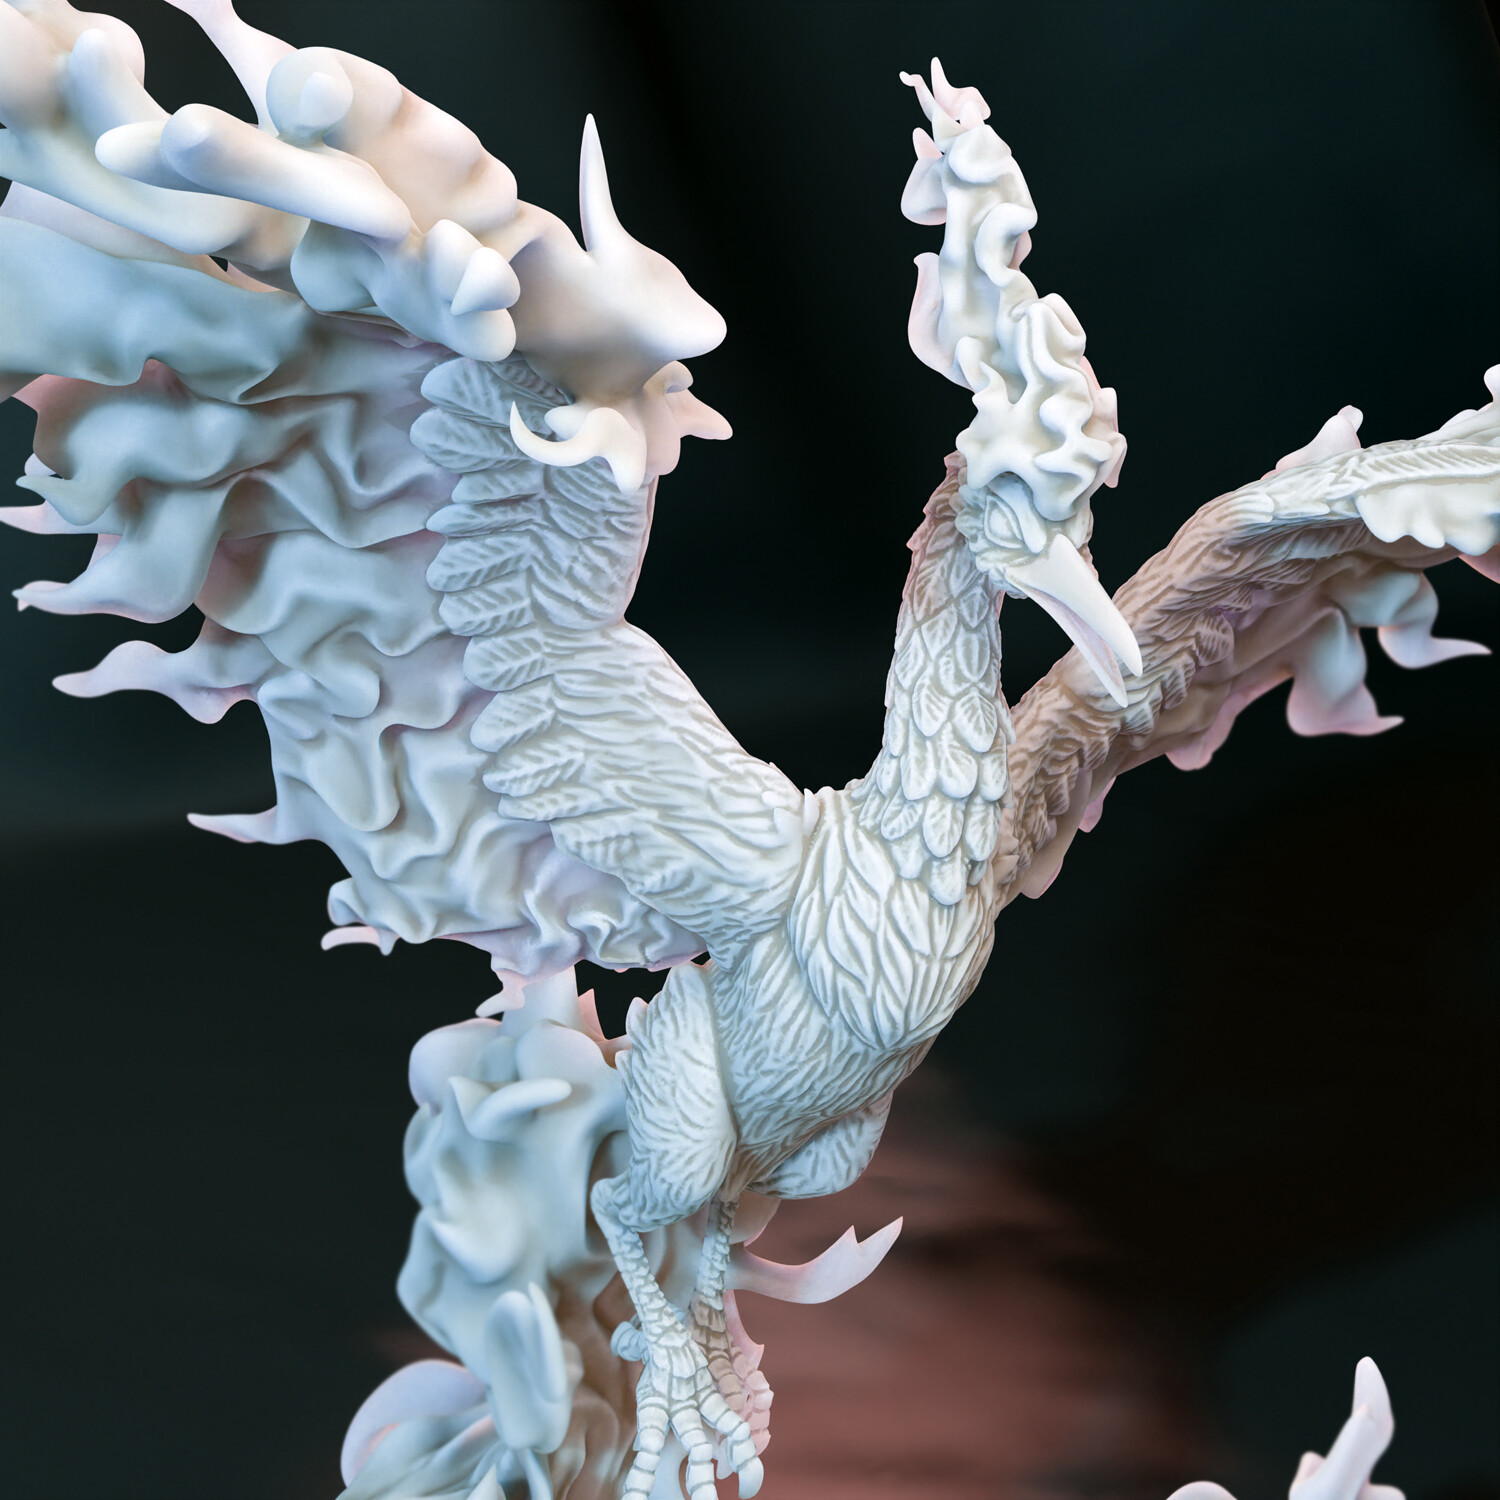 MOLTRES POKEMON 3D model 3D printable